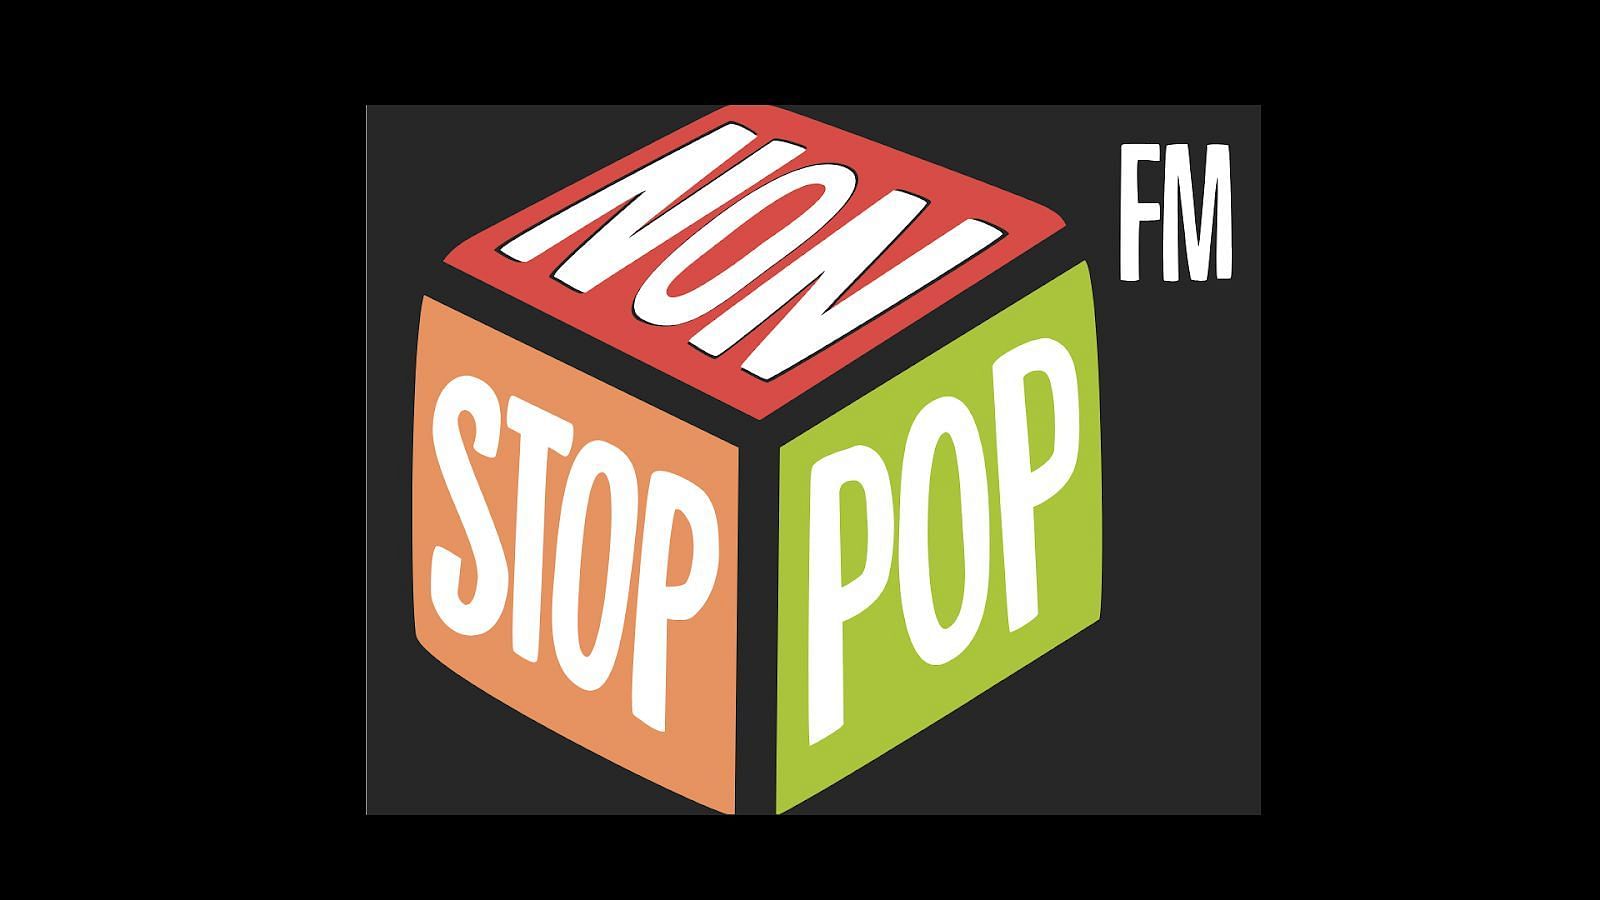 Sydøst forvridning Descent Non-Stop-Pop FM in GTA 5